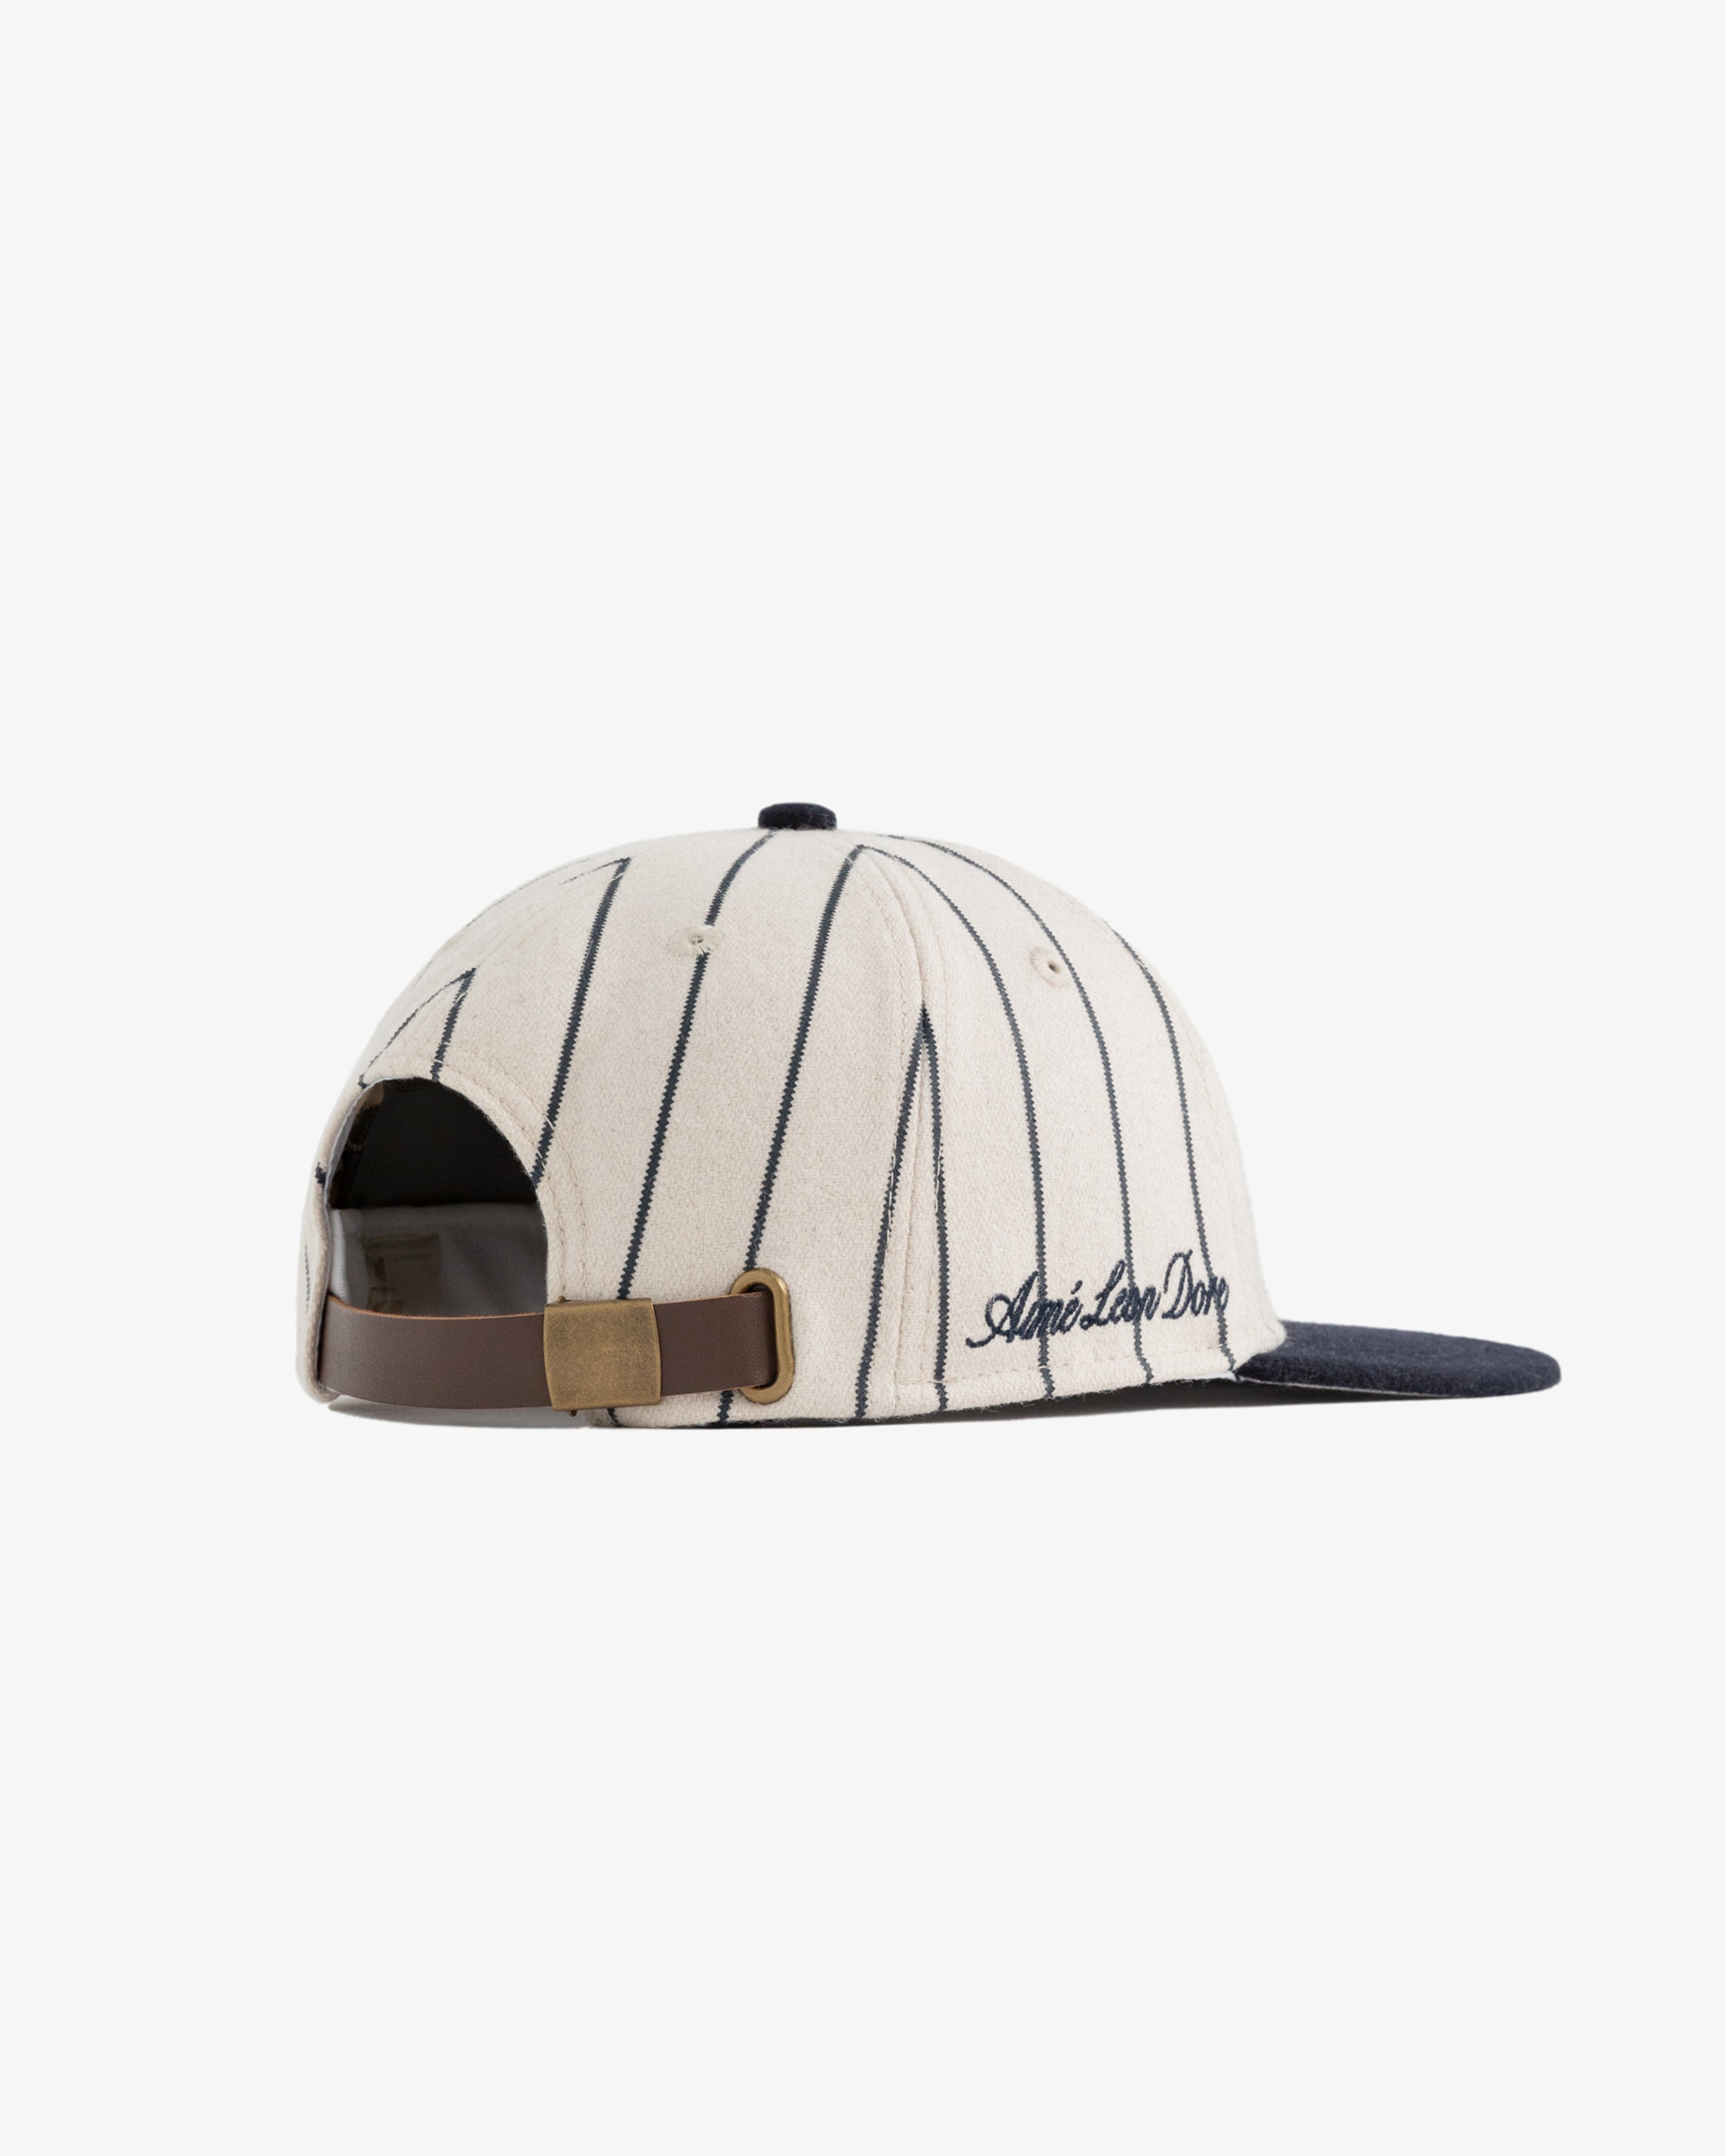 •GALD / New Era Wool Yankees Hat